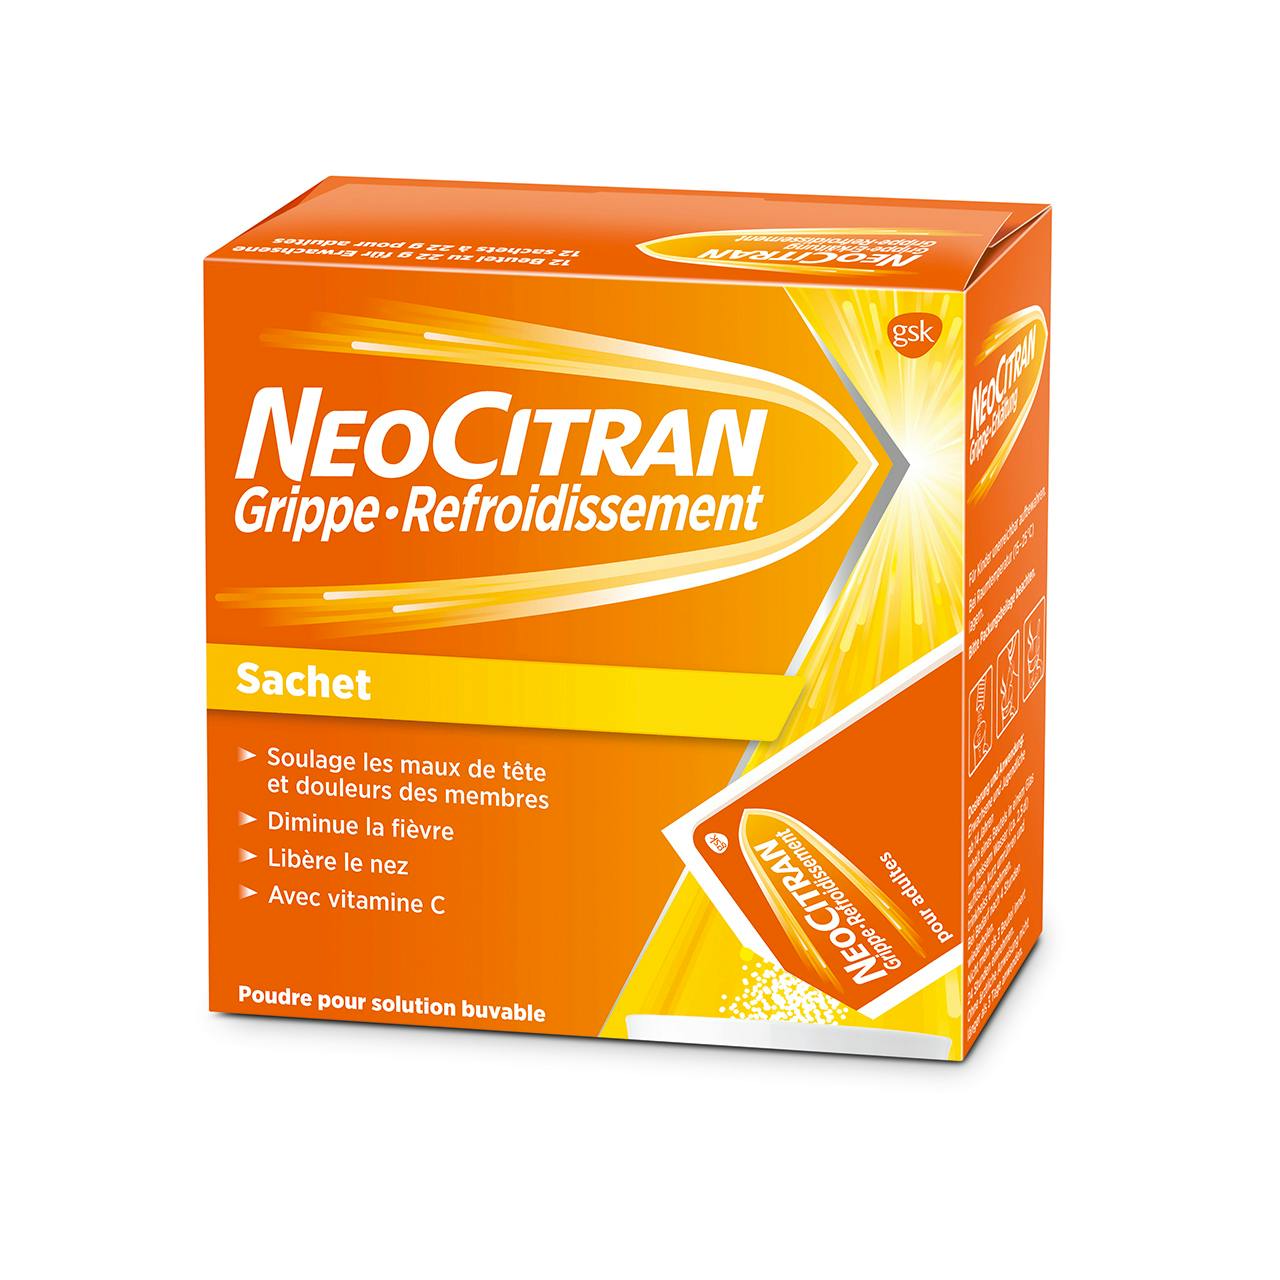 NeoCitran Grippe/refroidissement